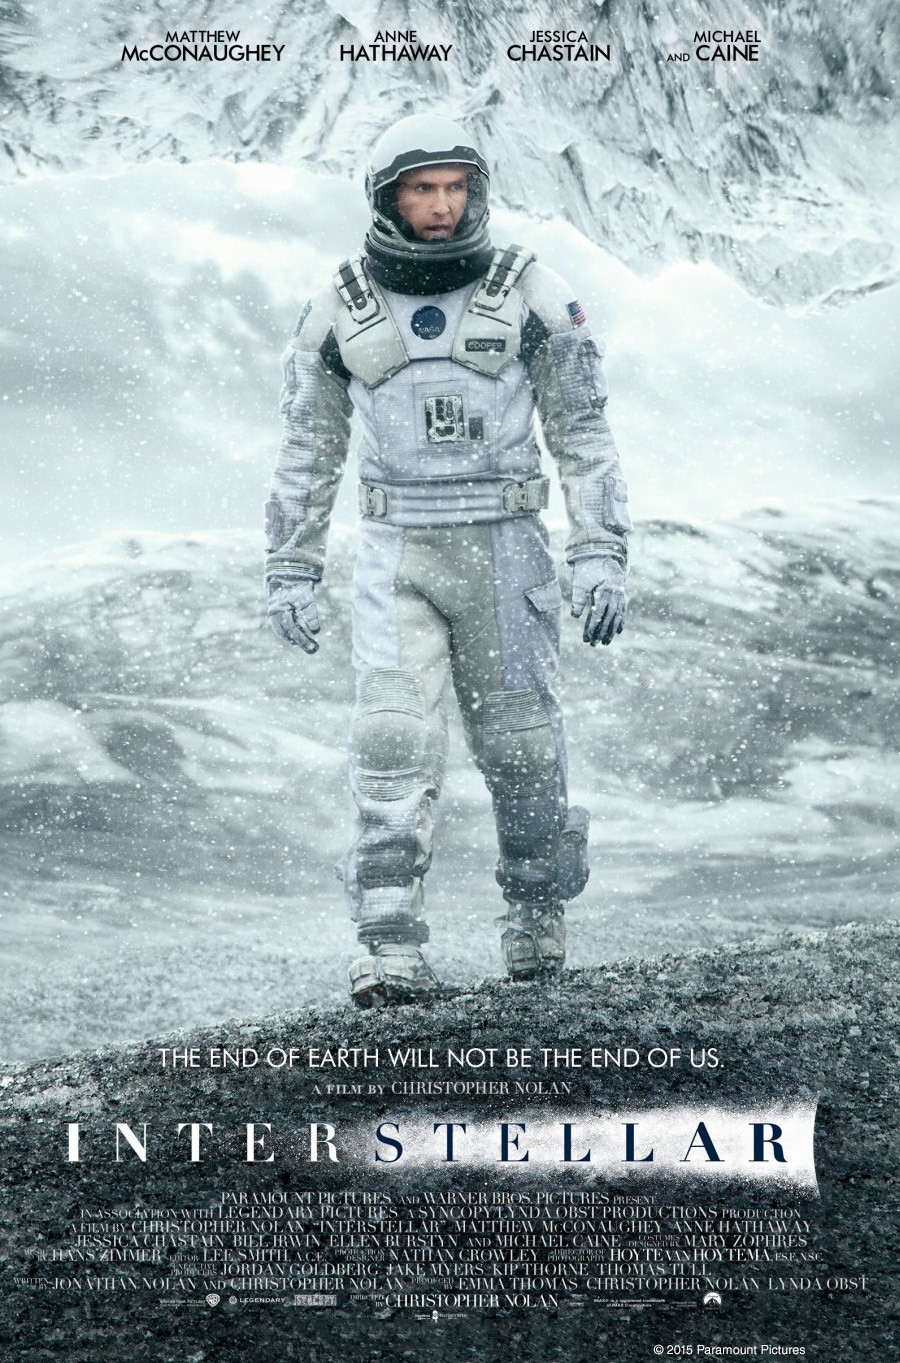 A movie poster of Interstellar, showing an astronaut walking on an alien planet